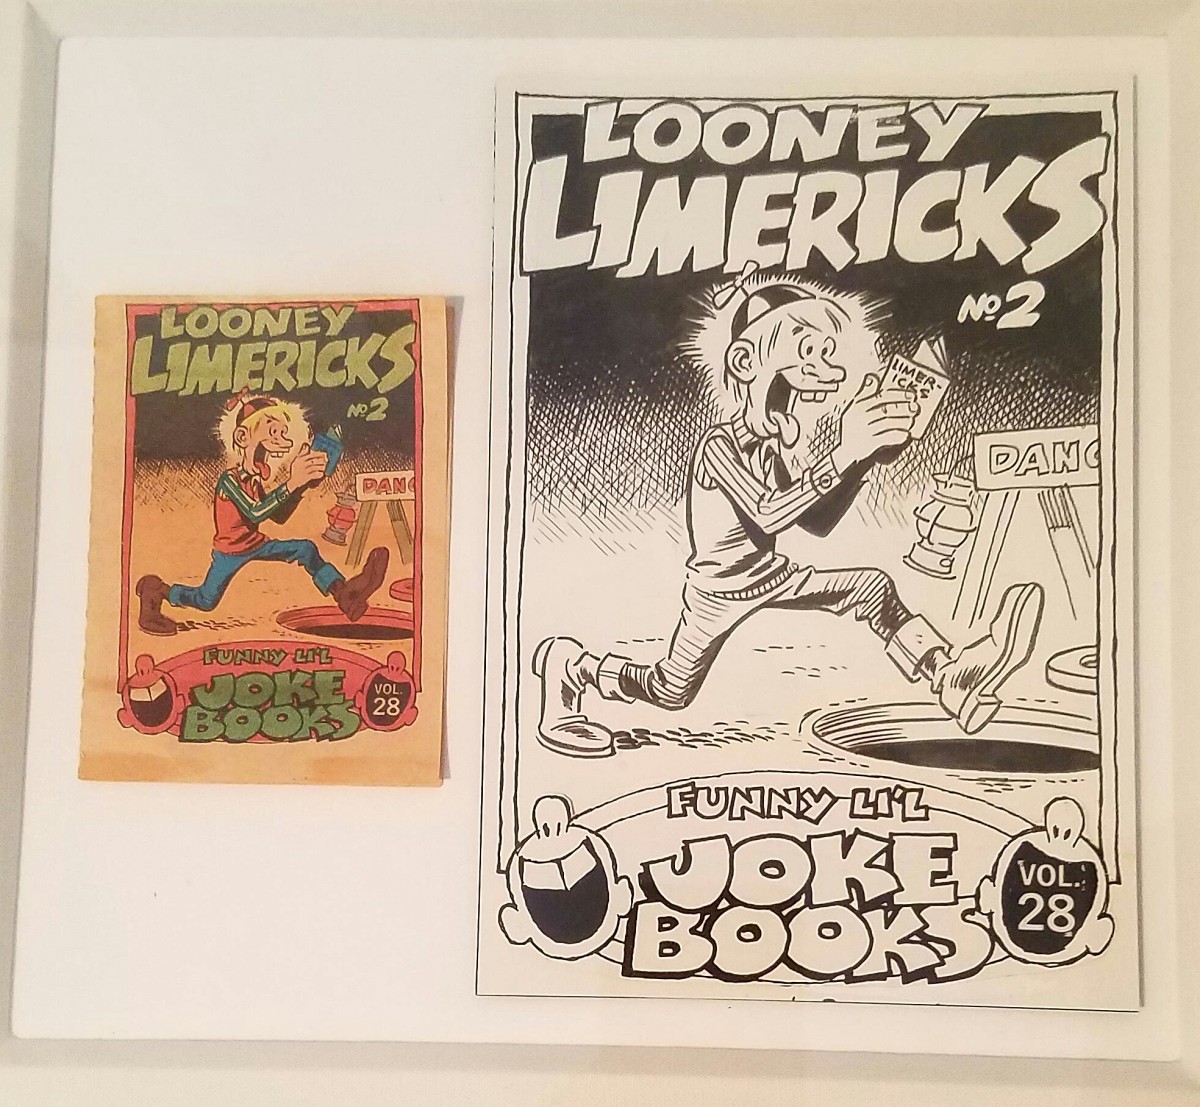 Funny L'il Joke Books #28  - Looney Limericks by Wally Wood 